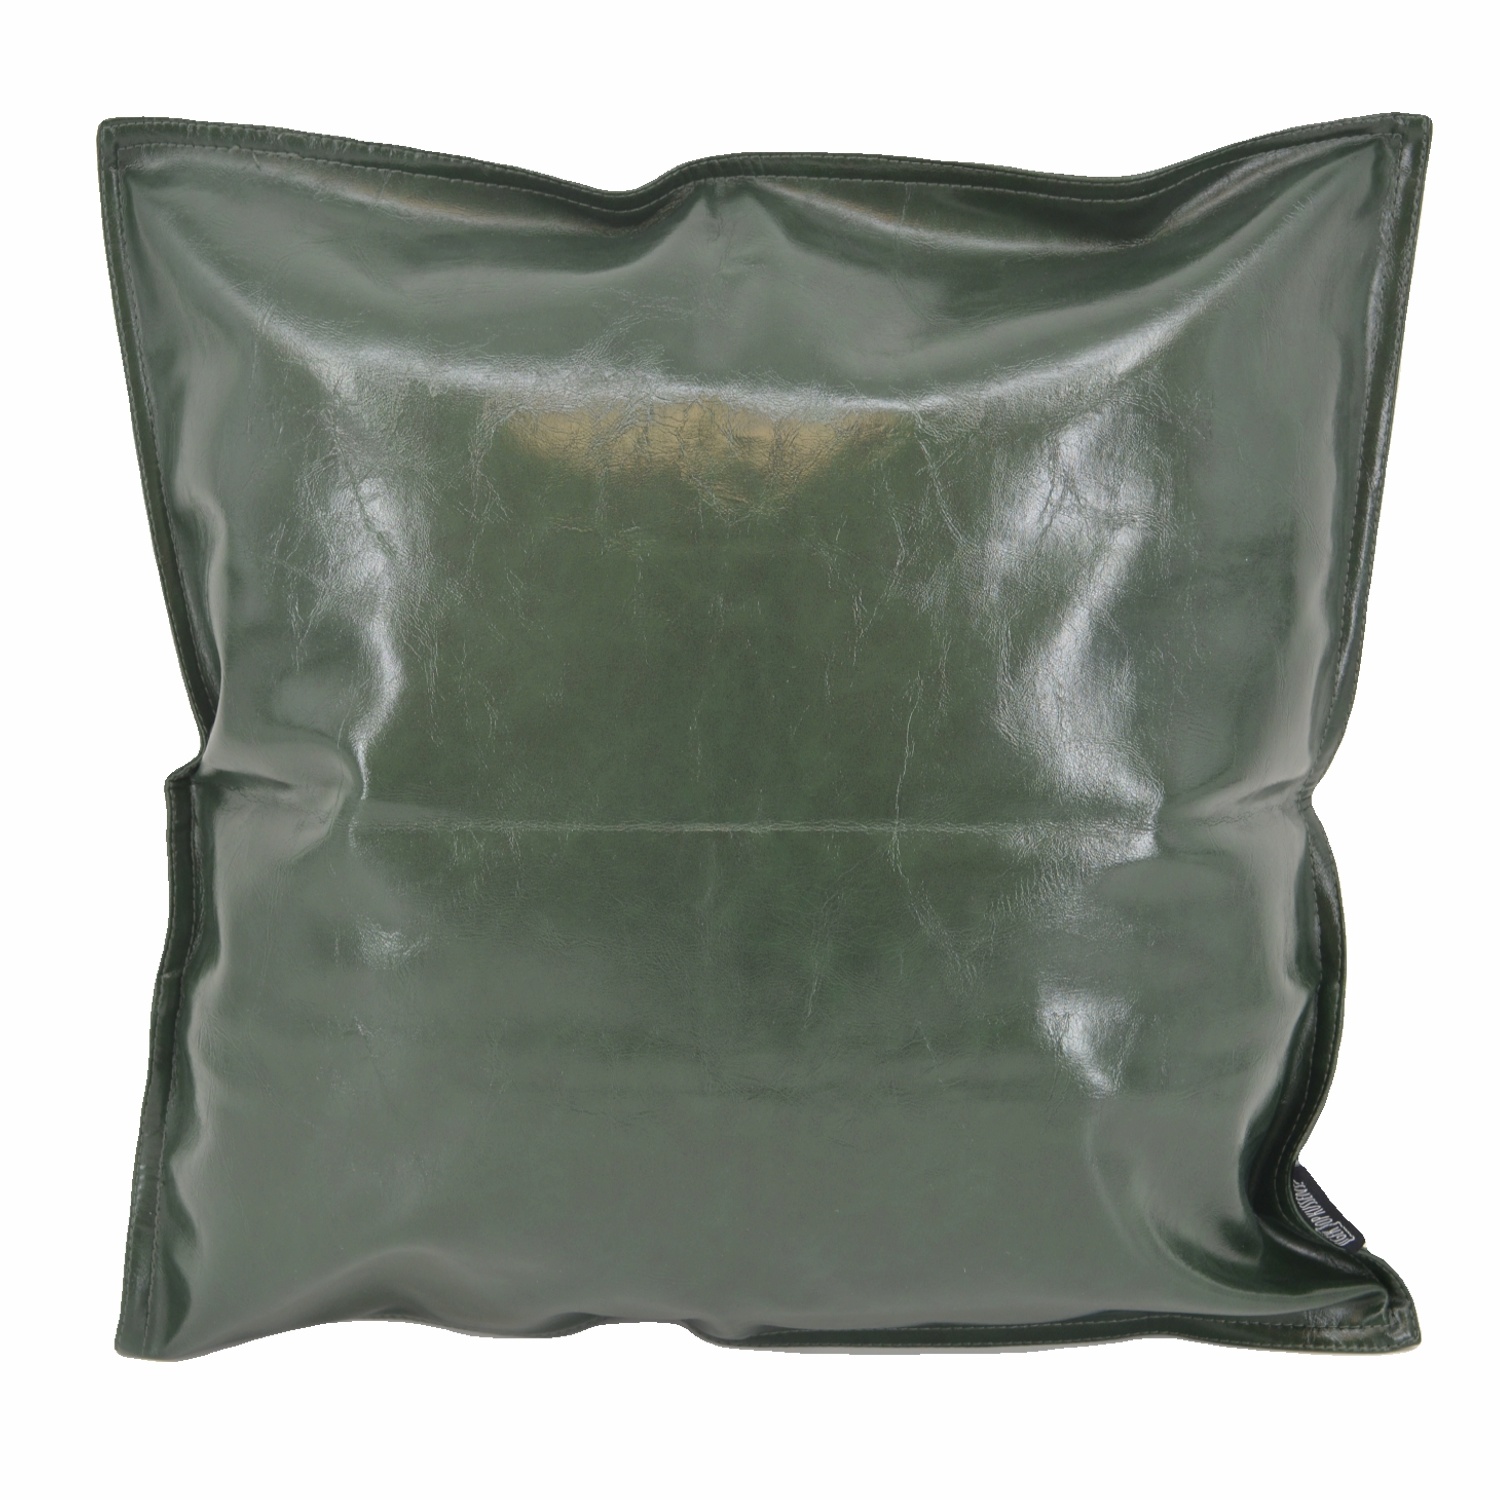 begrijpen Ophef toxiciteit Shiny Leather Donkergroen | 45 x 45 cm | Kussenhoes | PU Leder | Gek op  kussens!